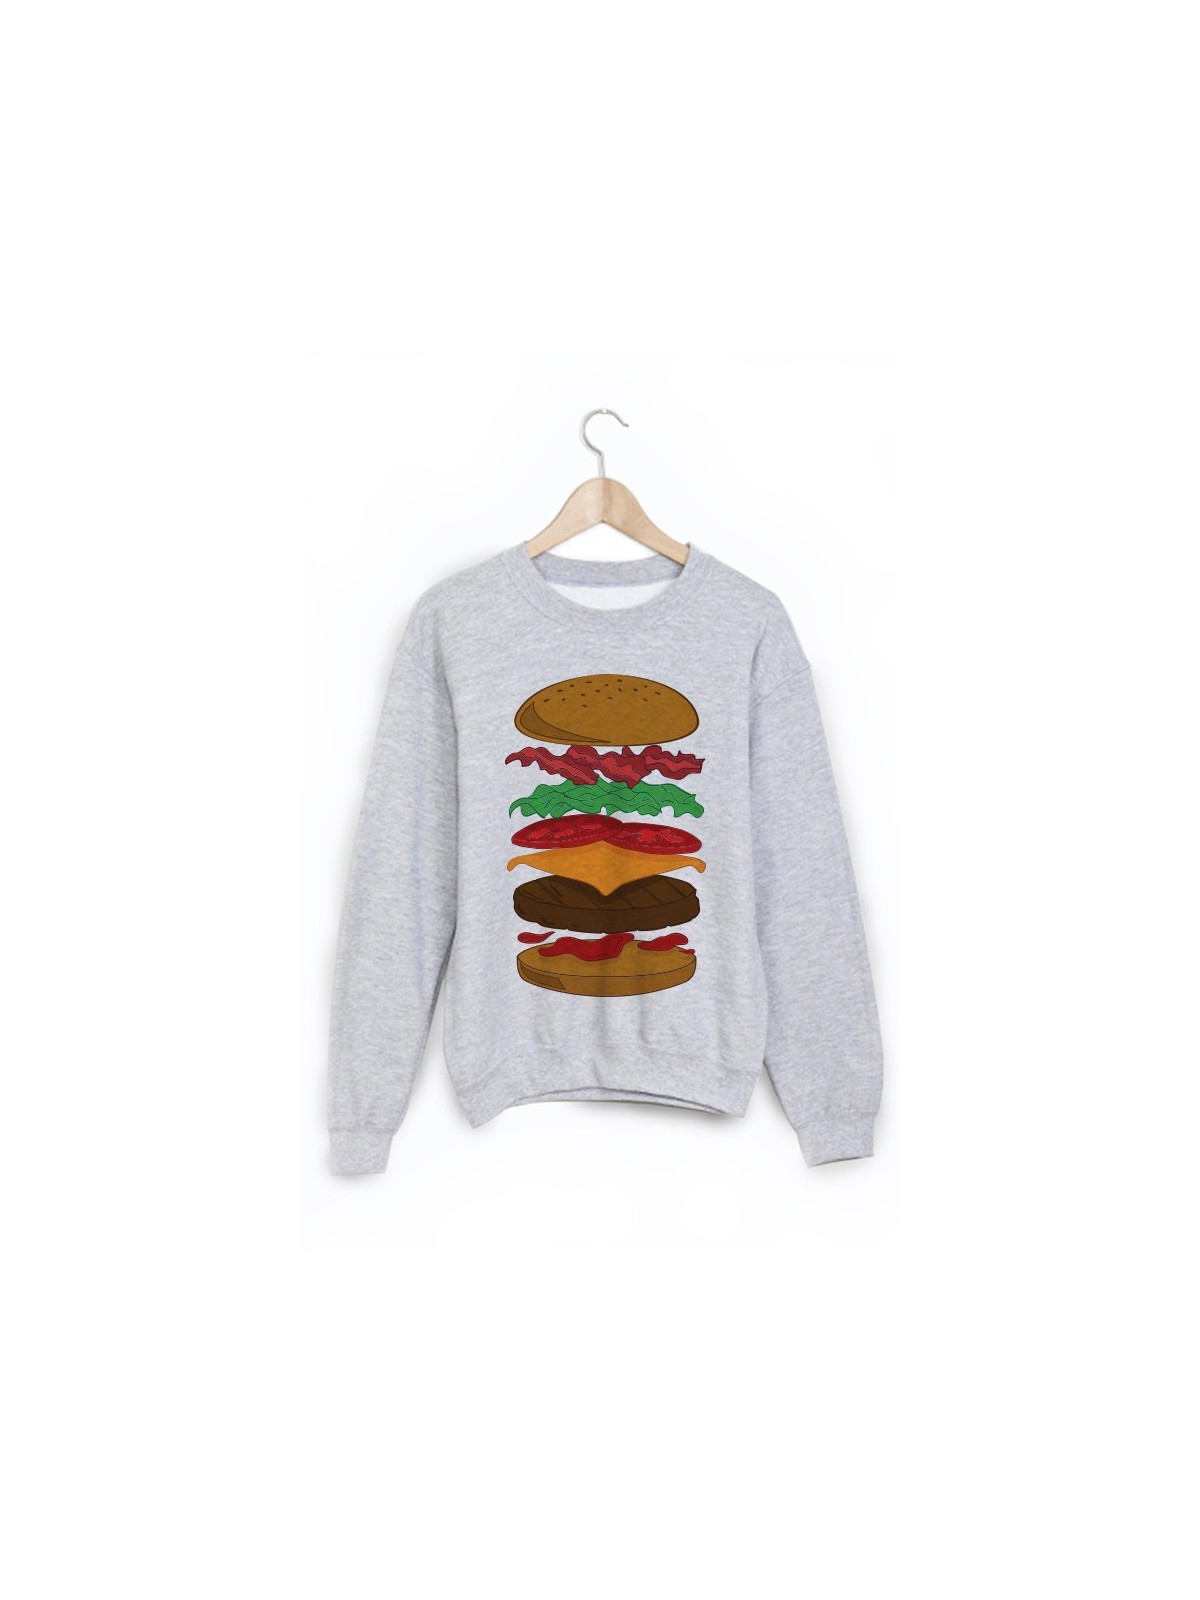 Sweat-Shirt hamburger ref 837